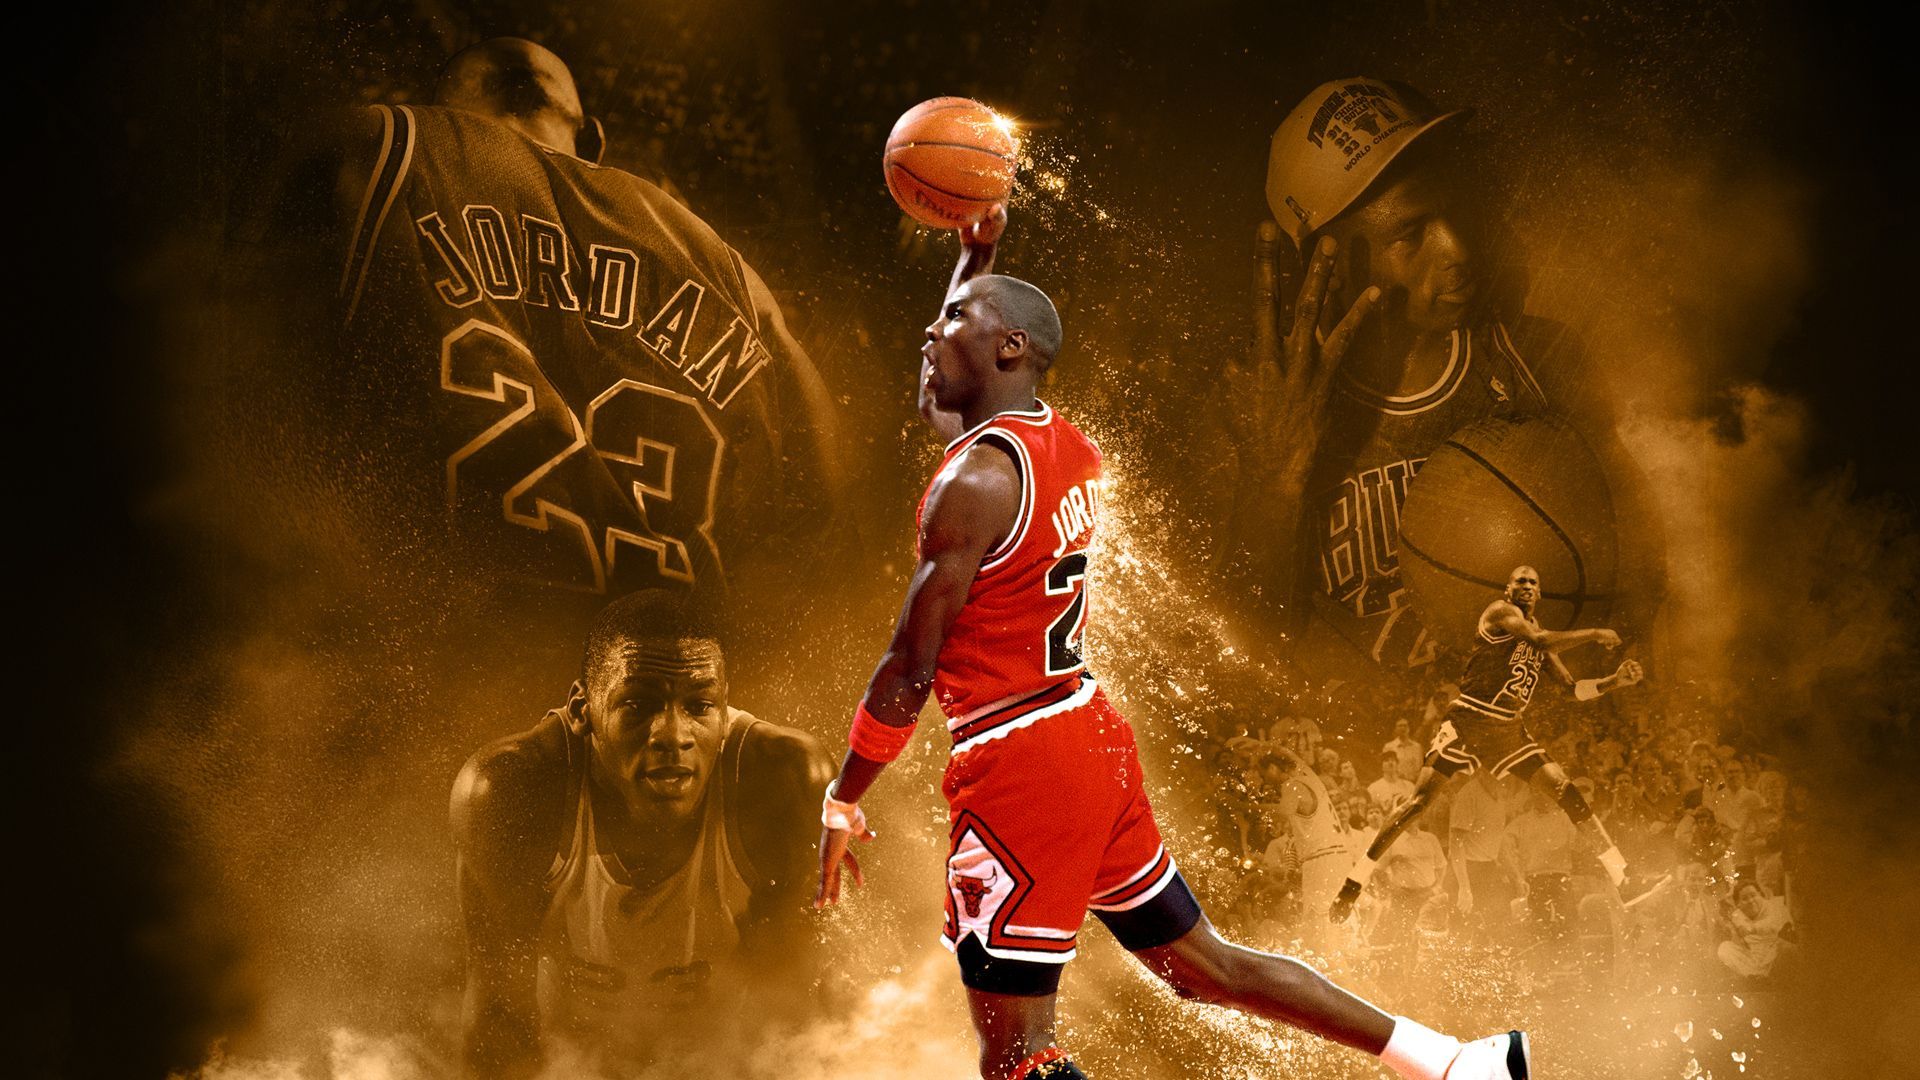 Michael Jordan Wallpaper 10 X 1080 em 2020. Michael jordan, Você é especial, Basquete